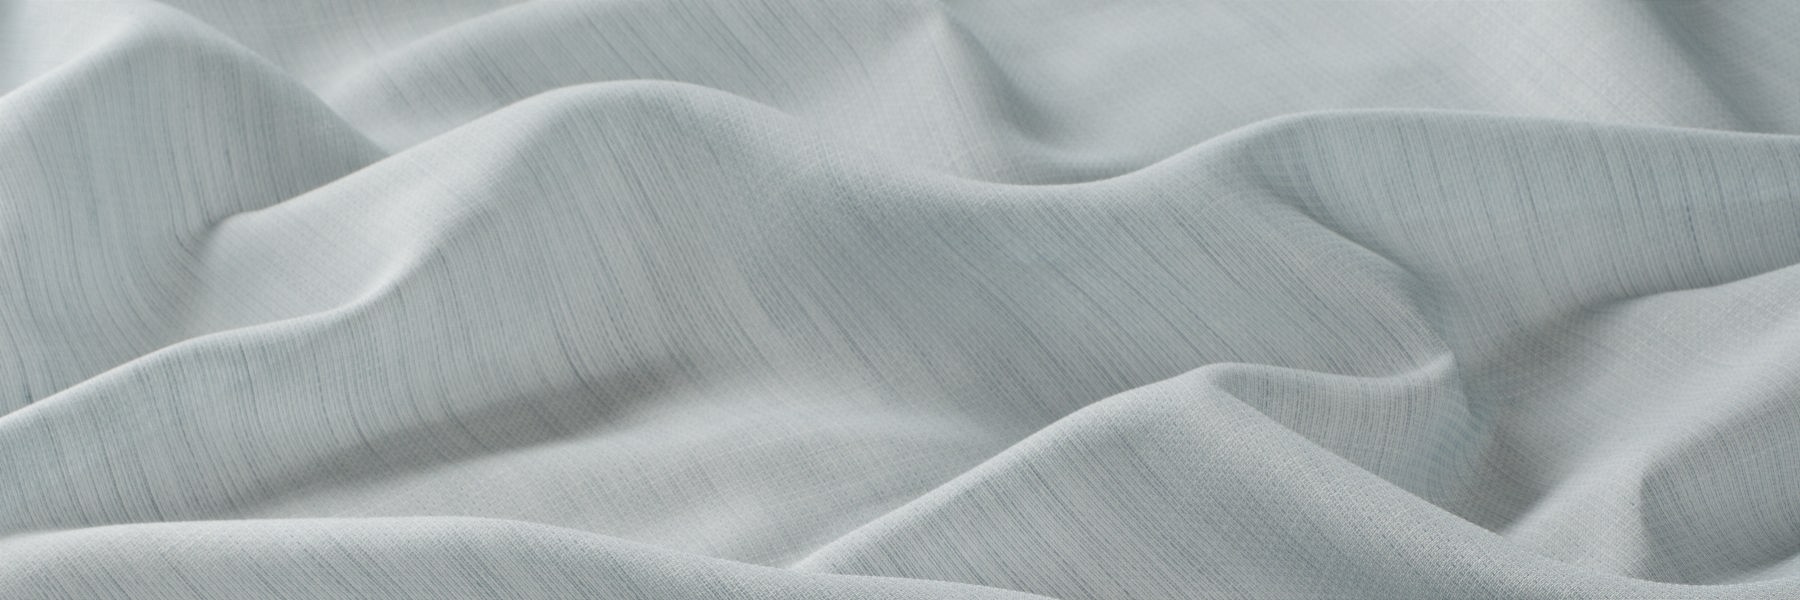 Gardine 1-6917-050 JAB Fabrics | UNICO ANSTOETZ